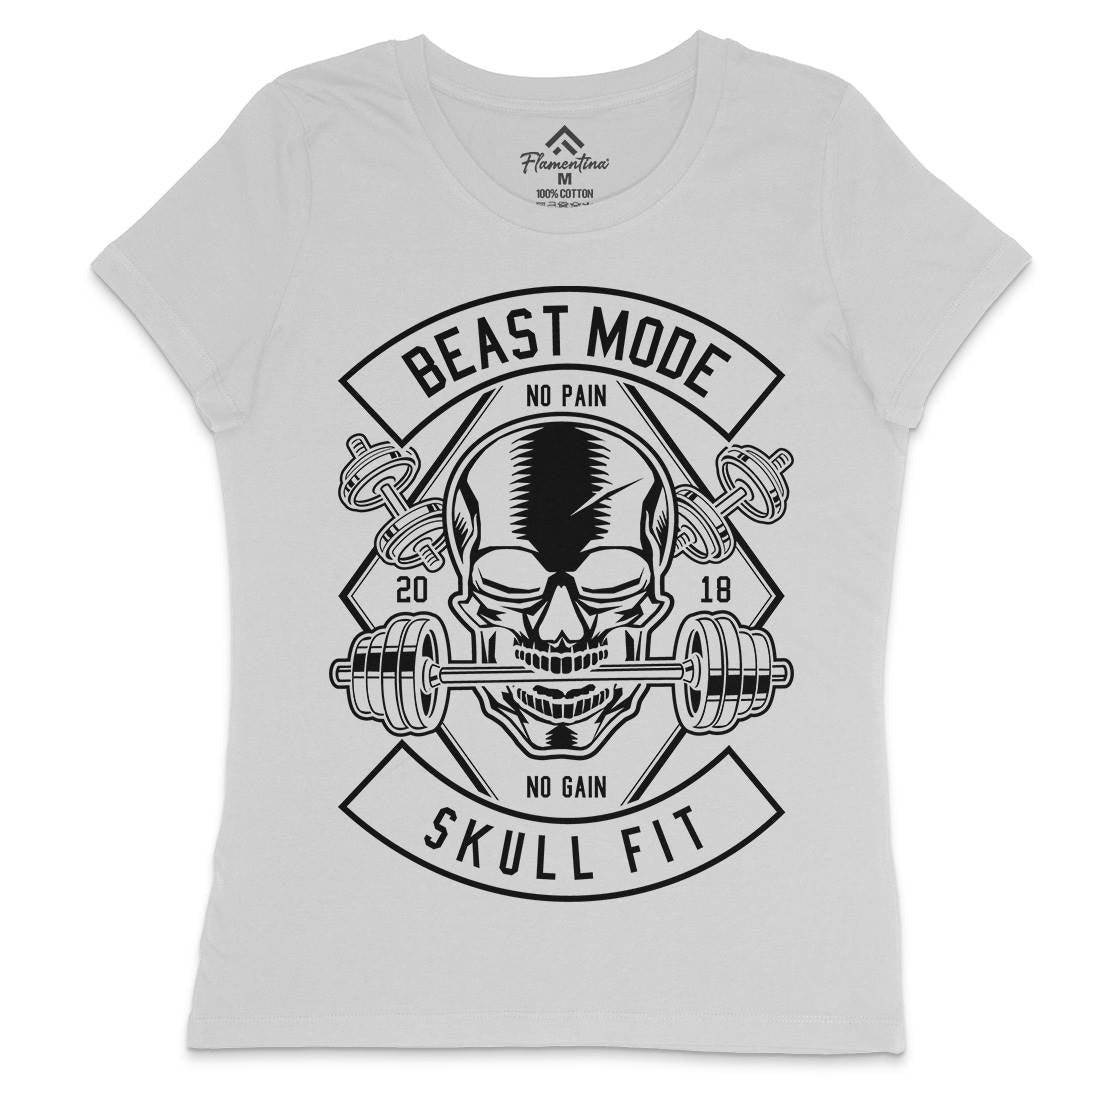 Skull Fit Womens Crew Neck T-Shirt Gym B628